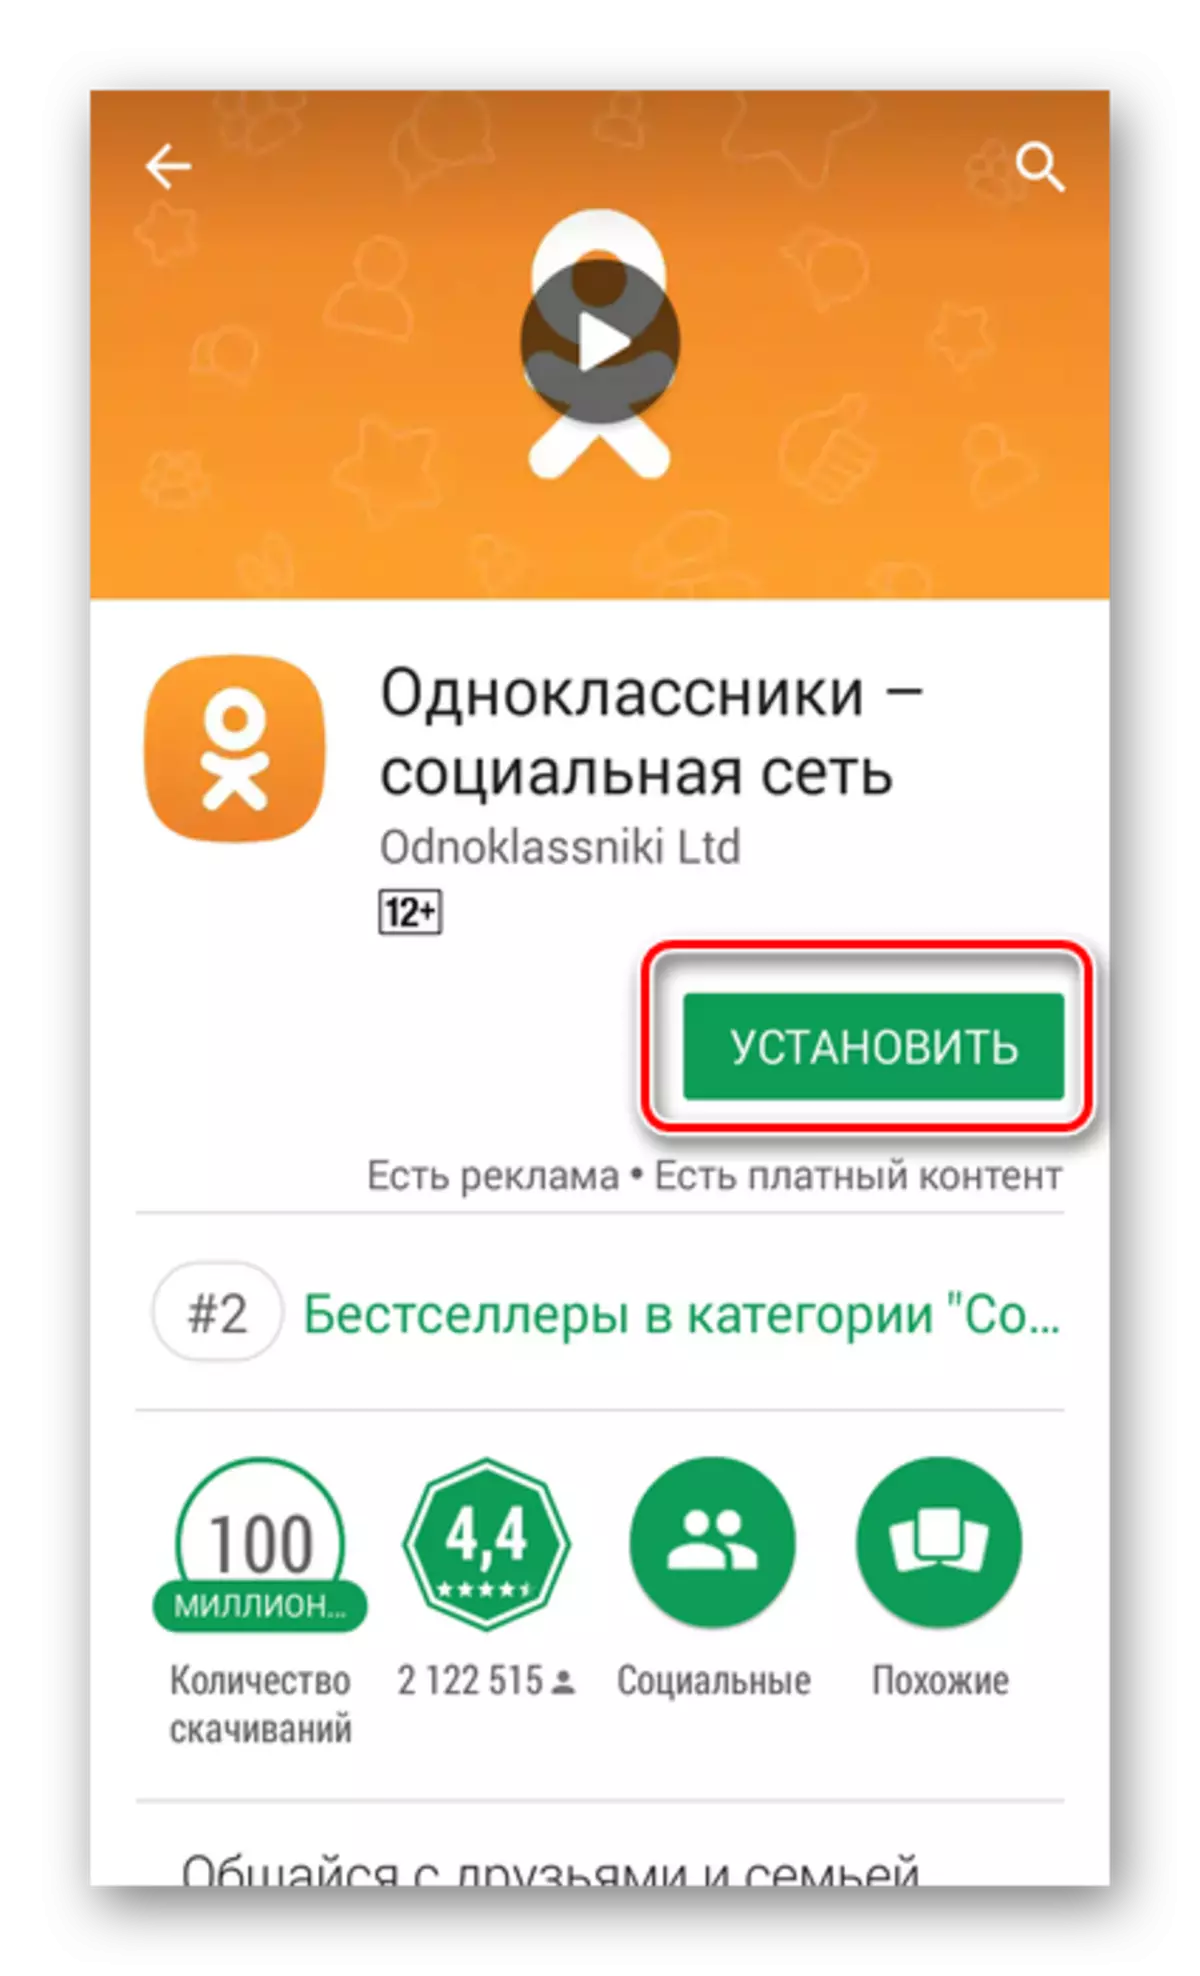 Ku rakib odnoklassniki app